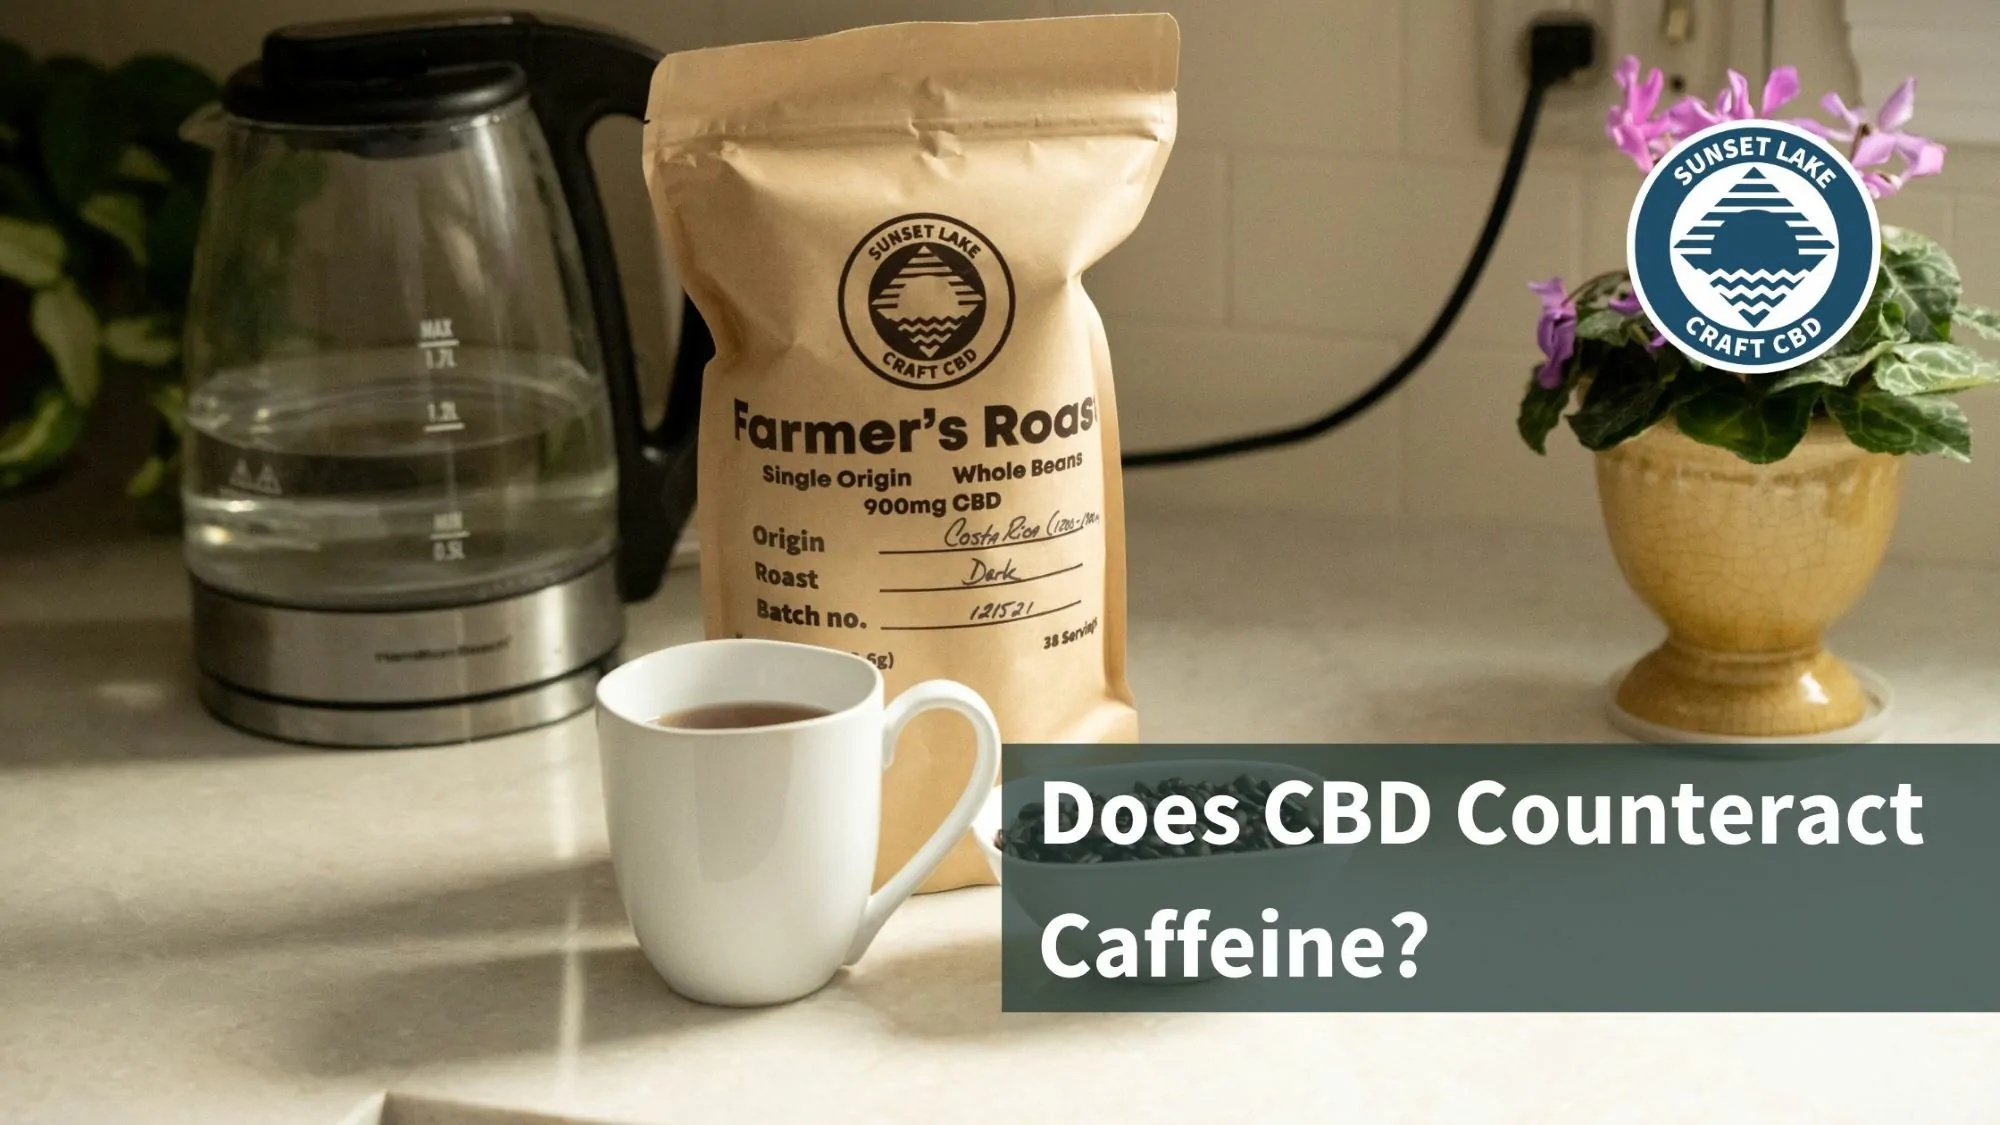 Does CBD Counteract Caffeine?